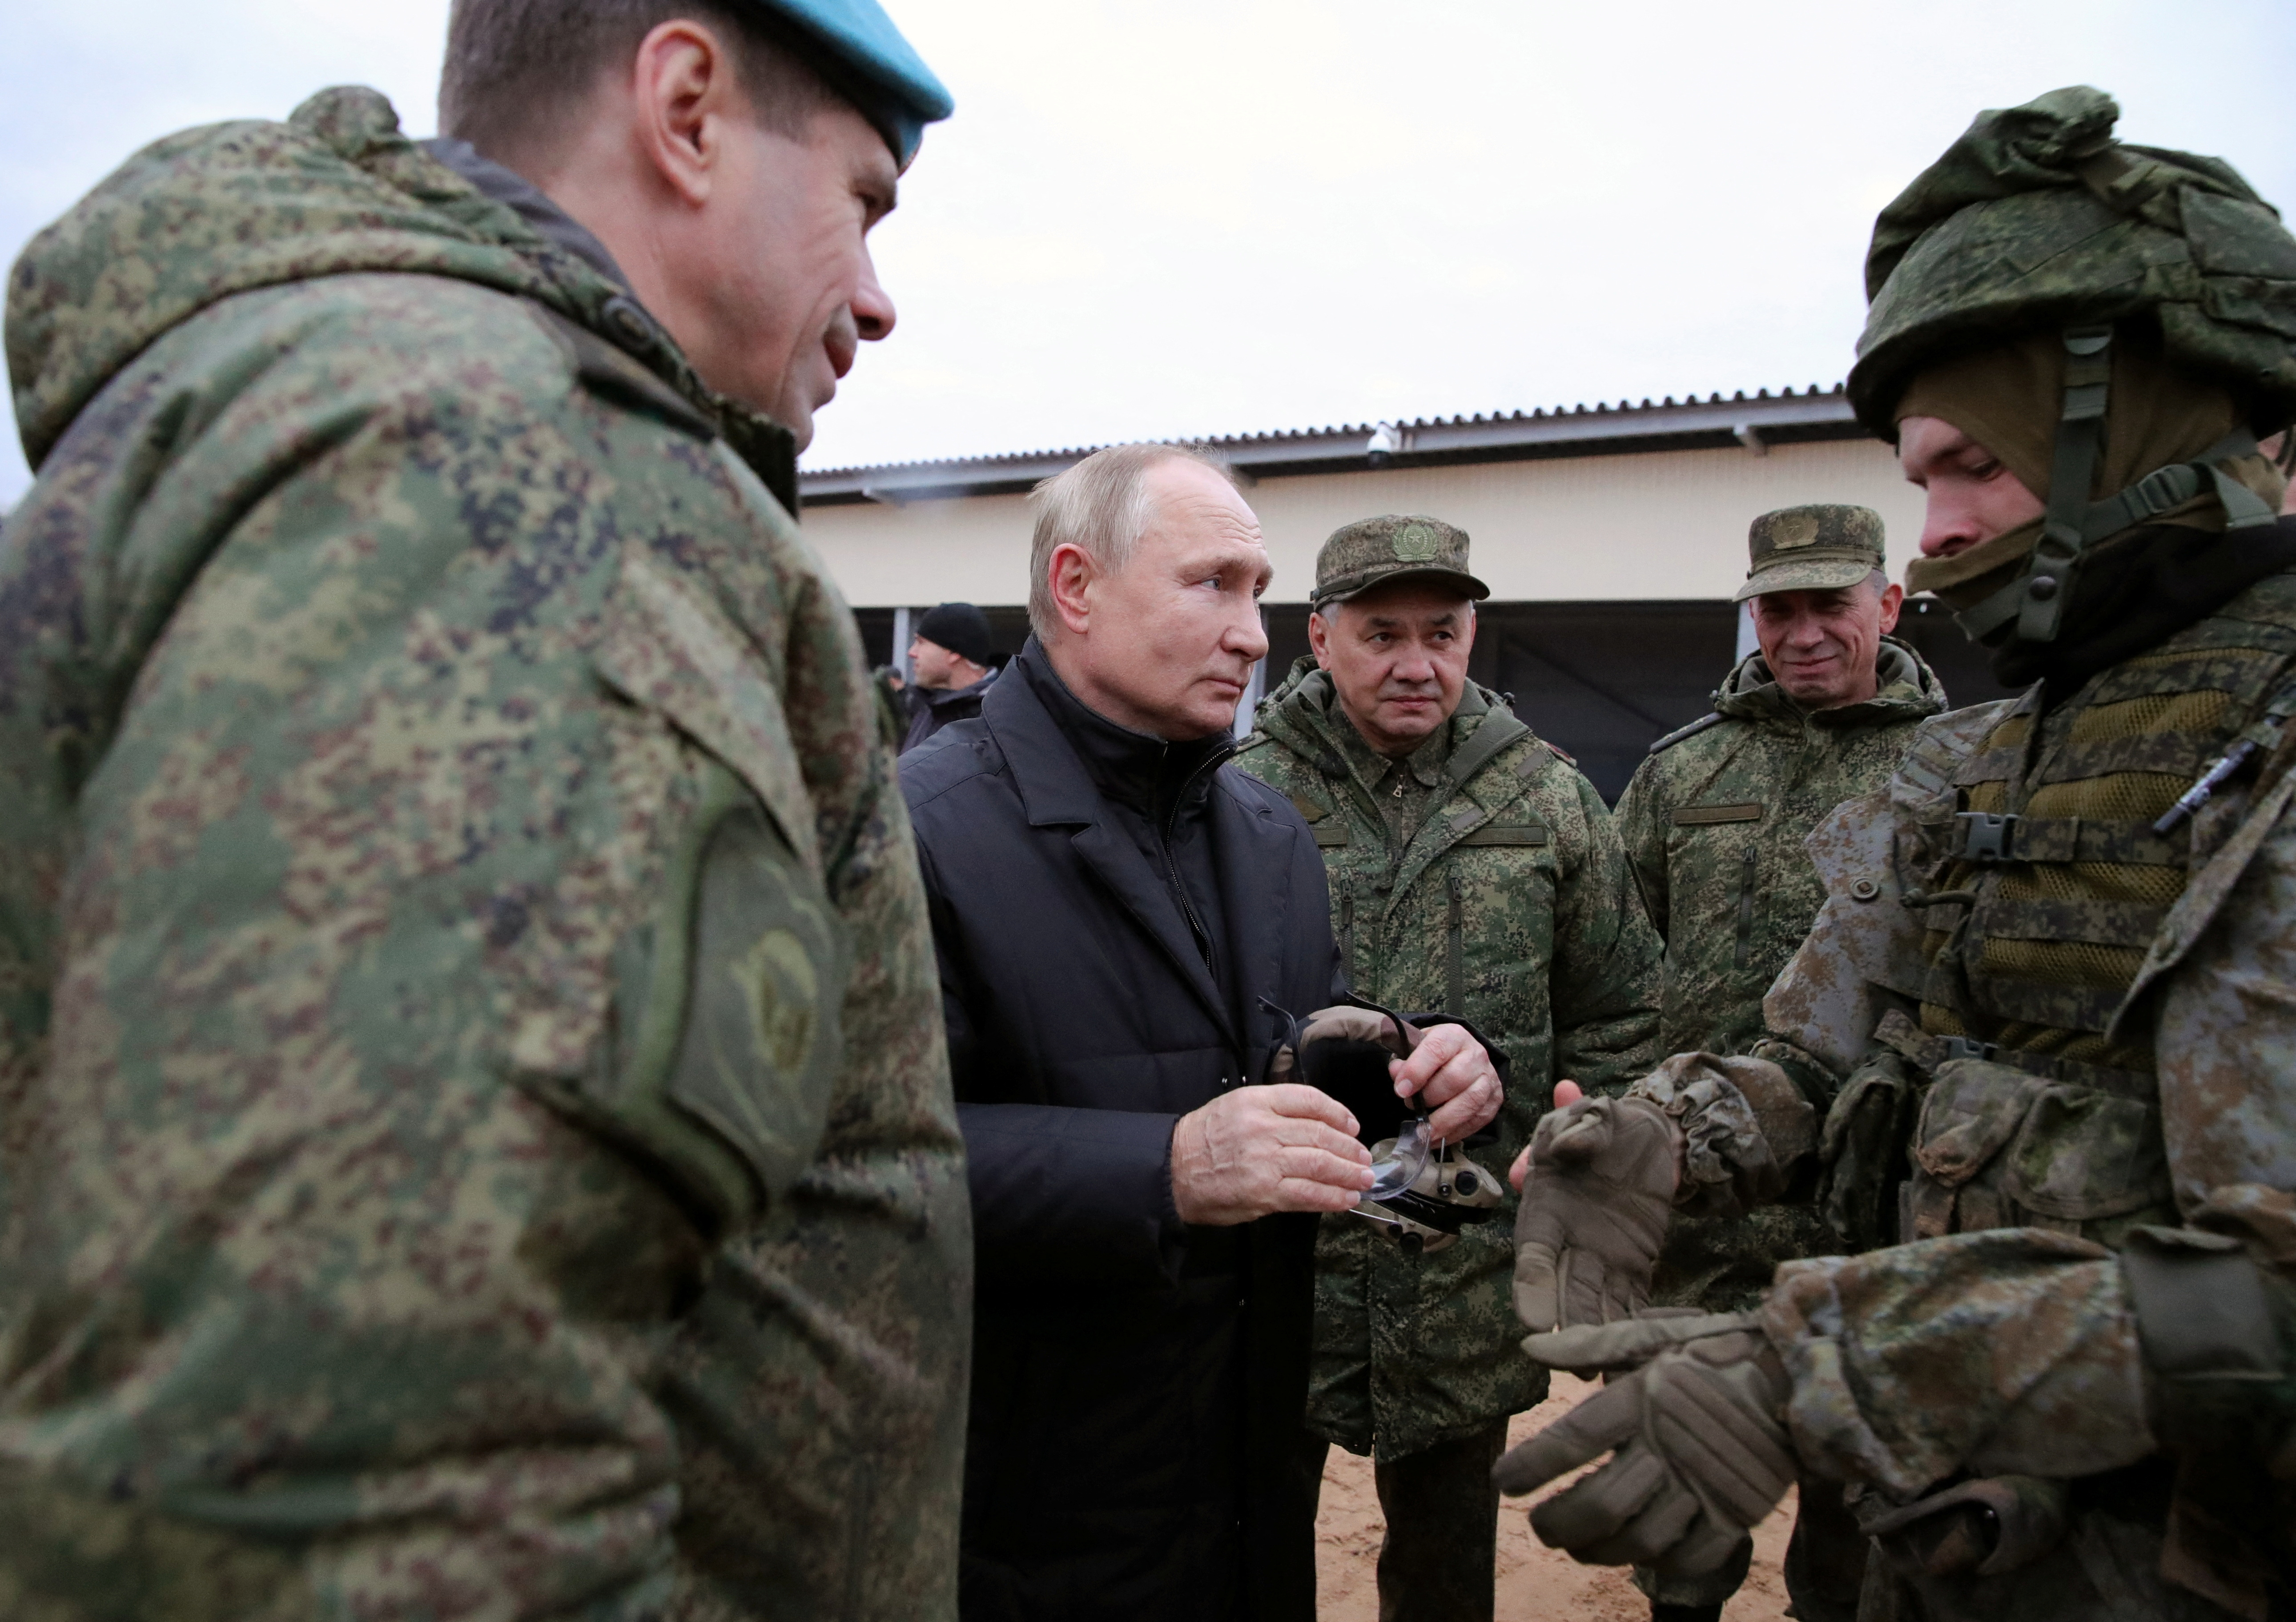 Putin's troops accused of war crimes in Ukraine (Sputnik/Mikhail Klimentyev/Kremlin via REUTERS)